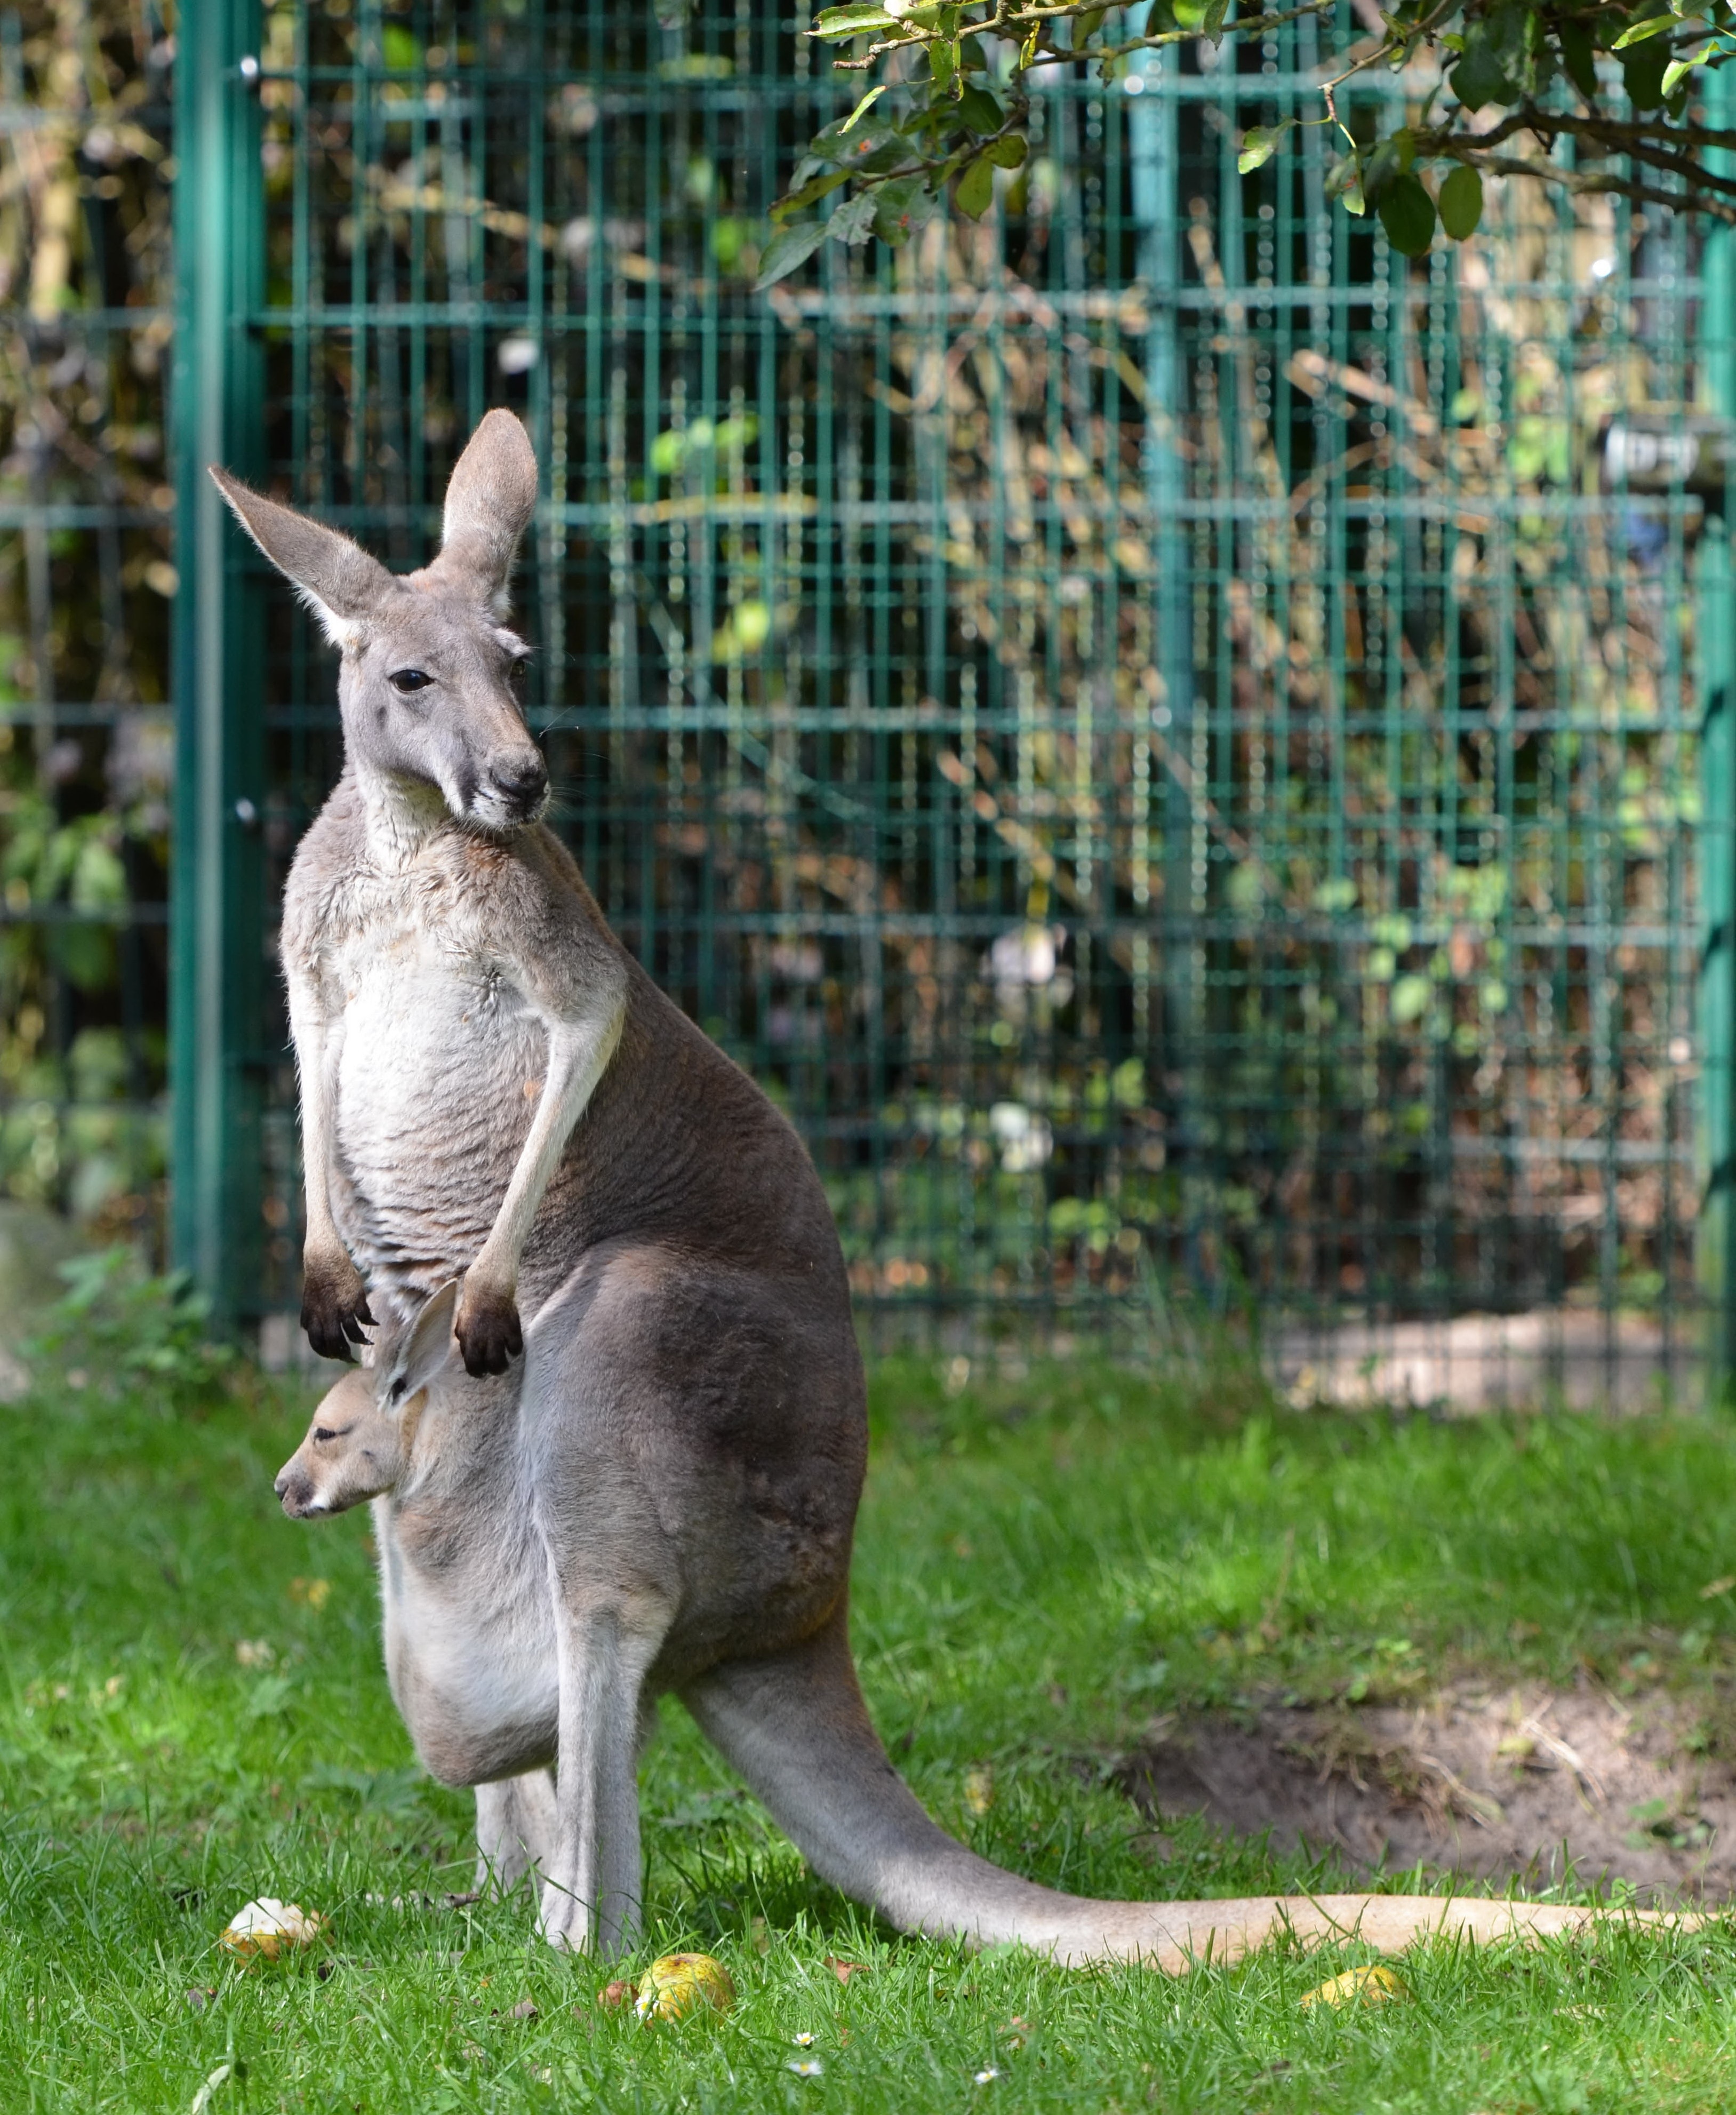 gray kangaroo on green grass field during daytime